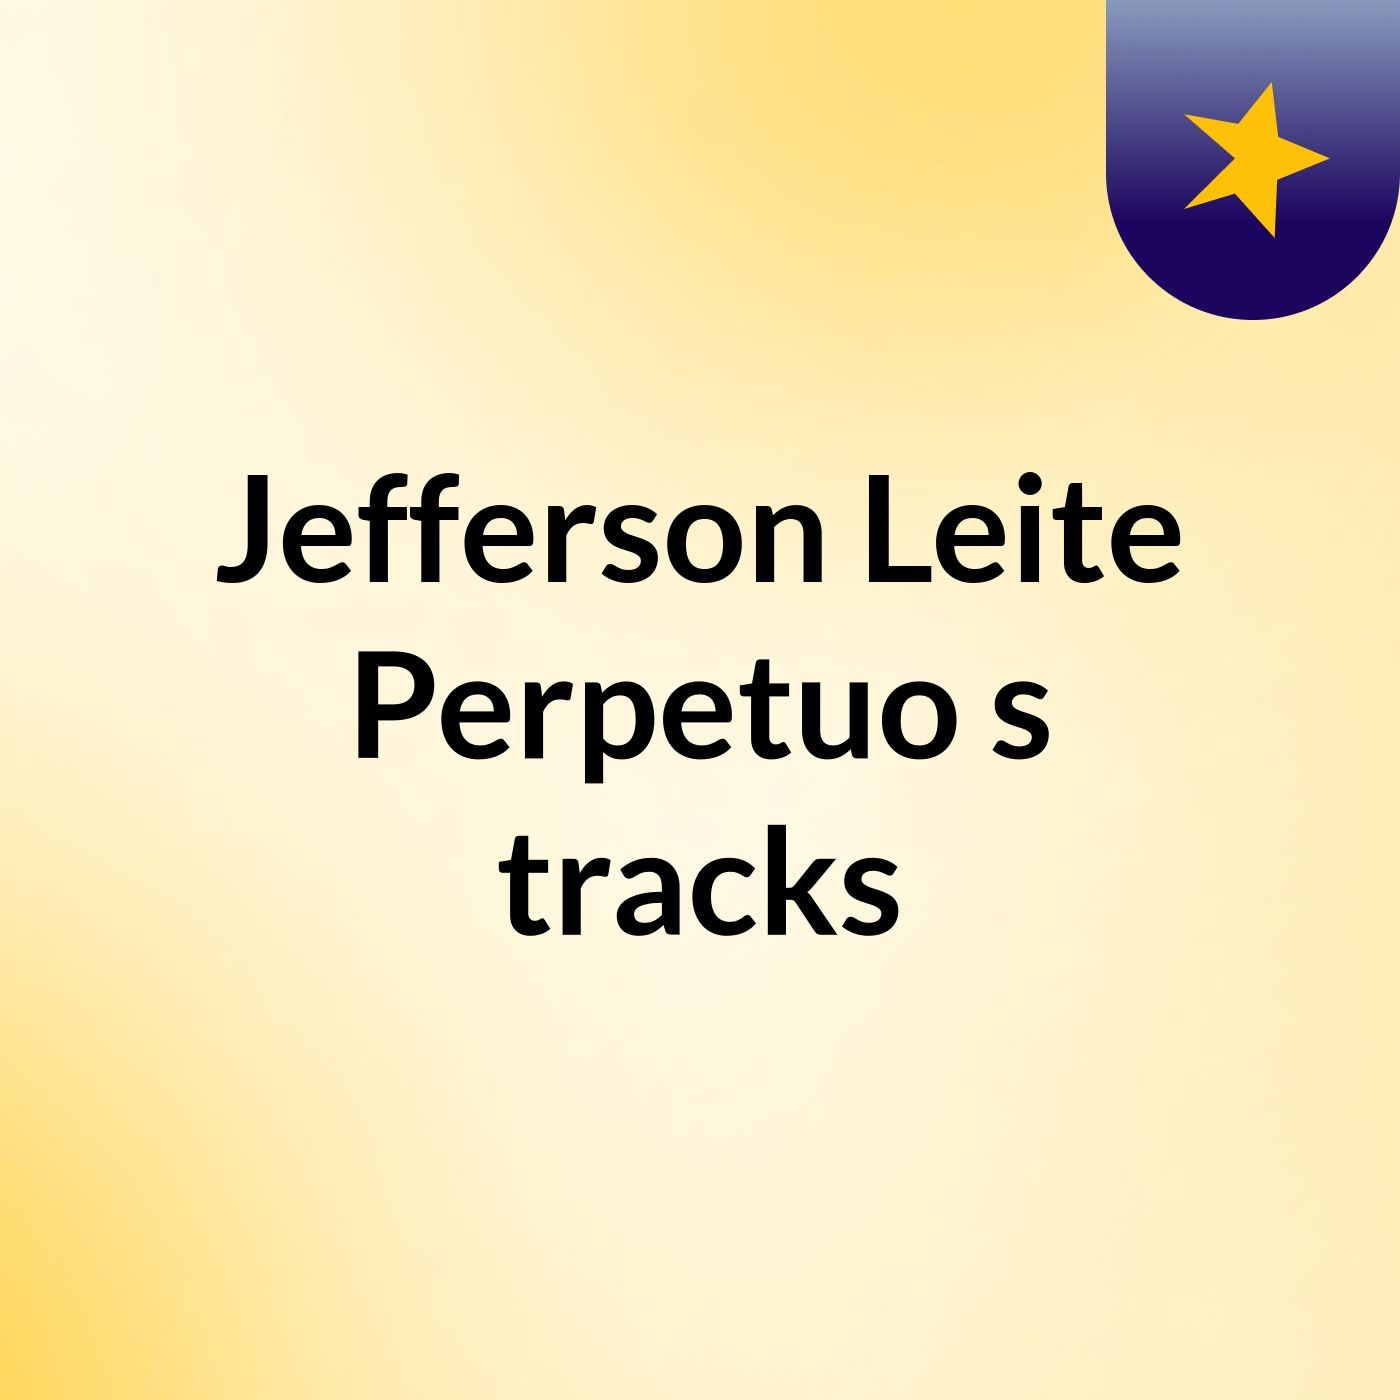 Jefferson Leite Perpetuo's tracks